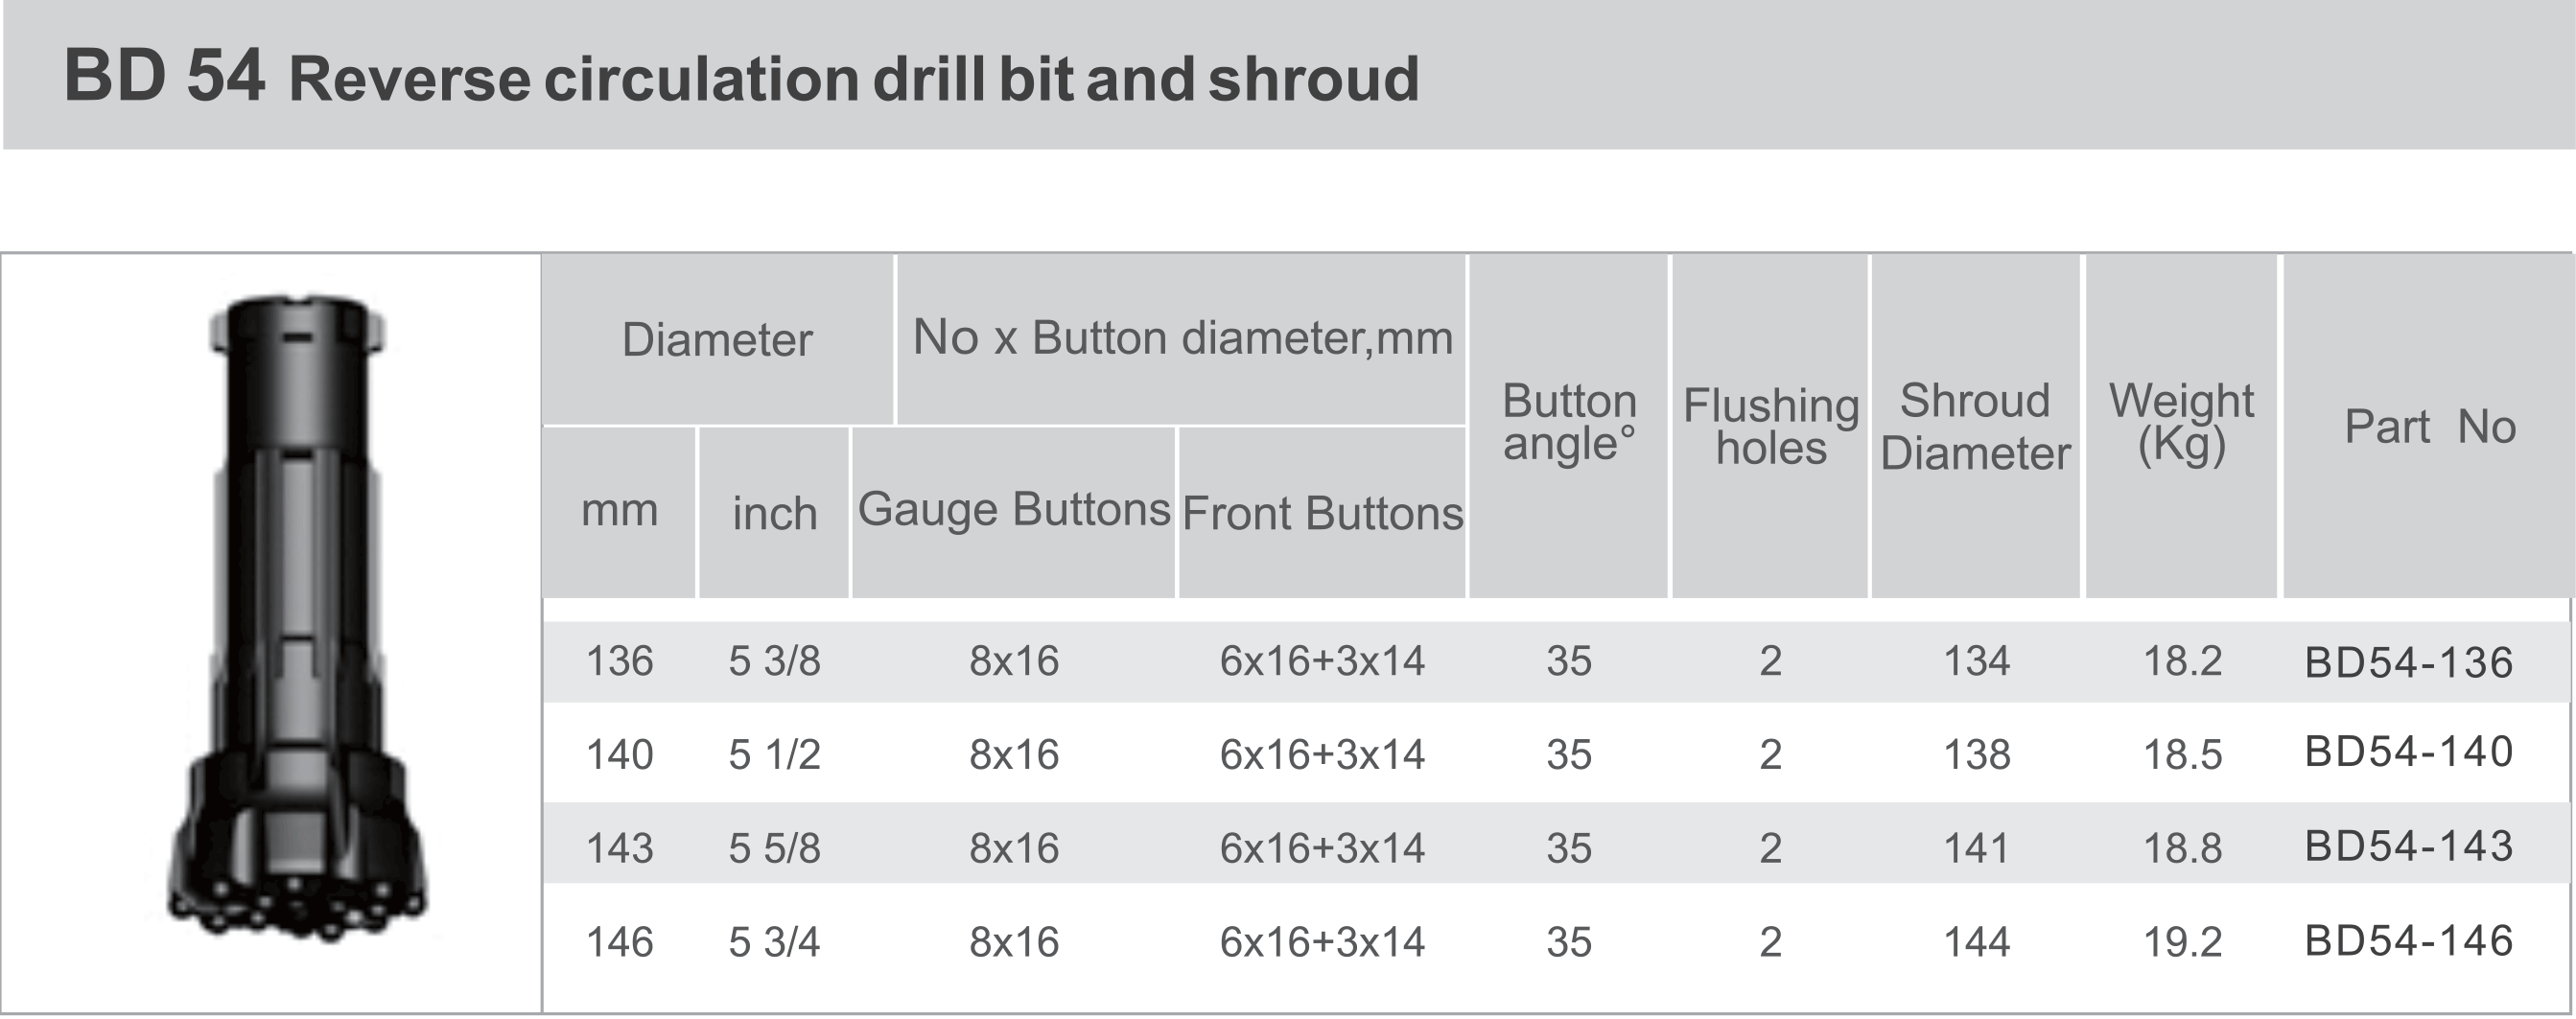 Black Diamond Drilling BD54 RC Reverse Circulation Drill Bit Shroud technical data